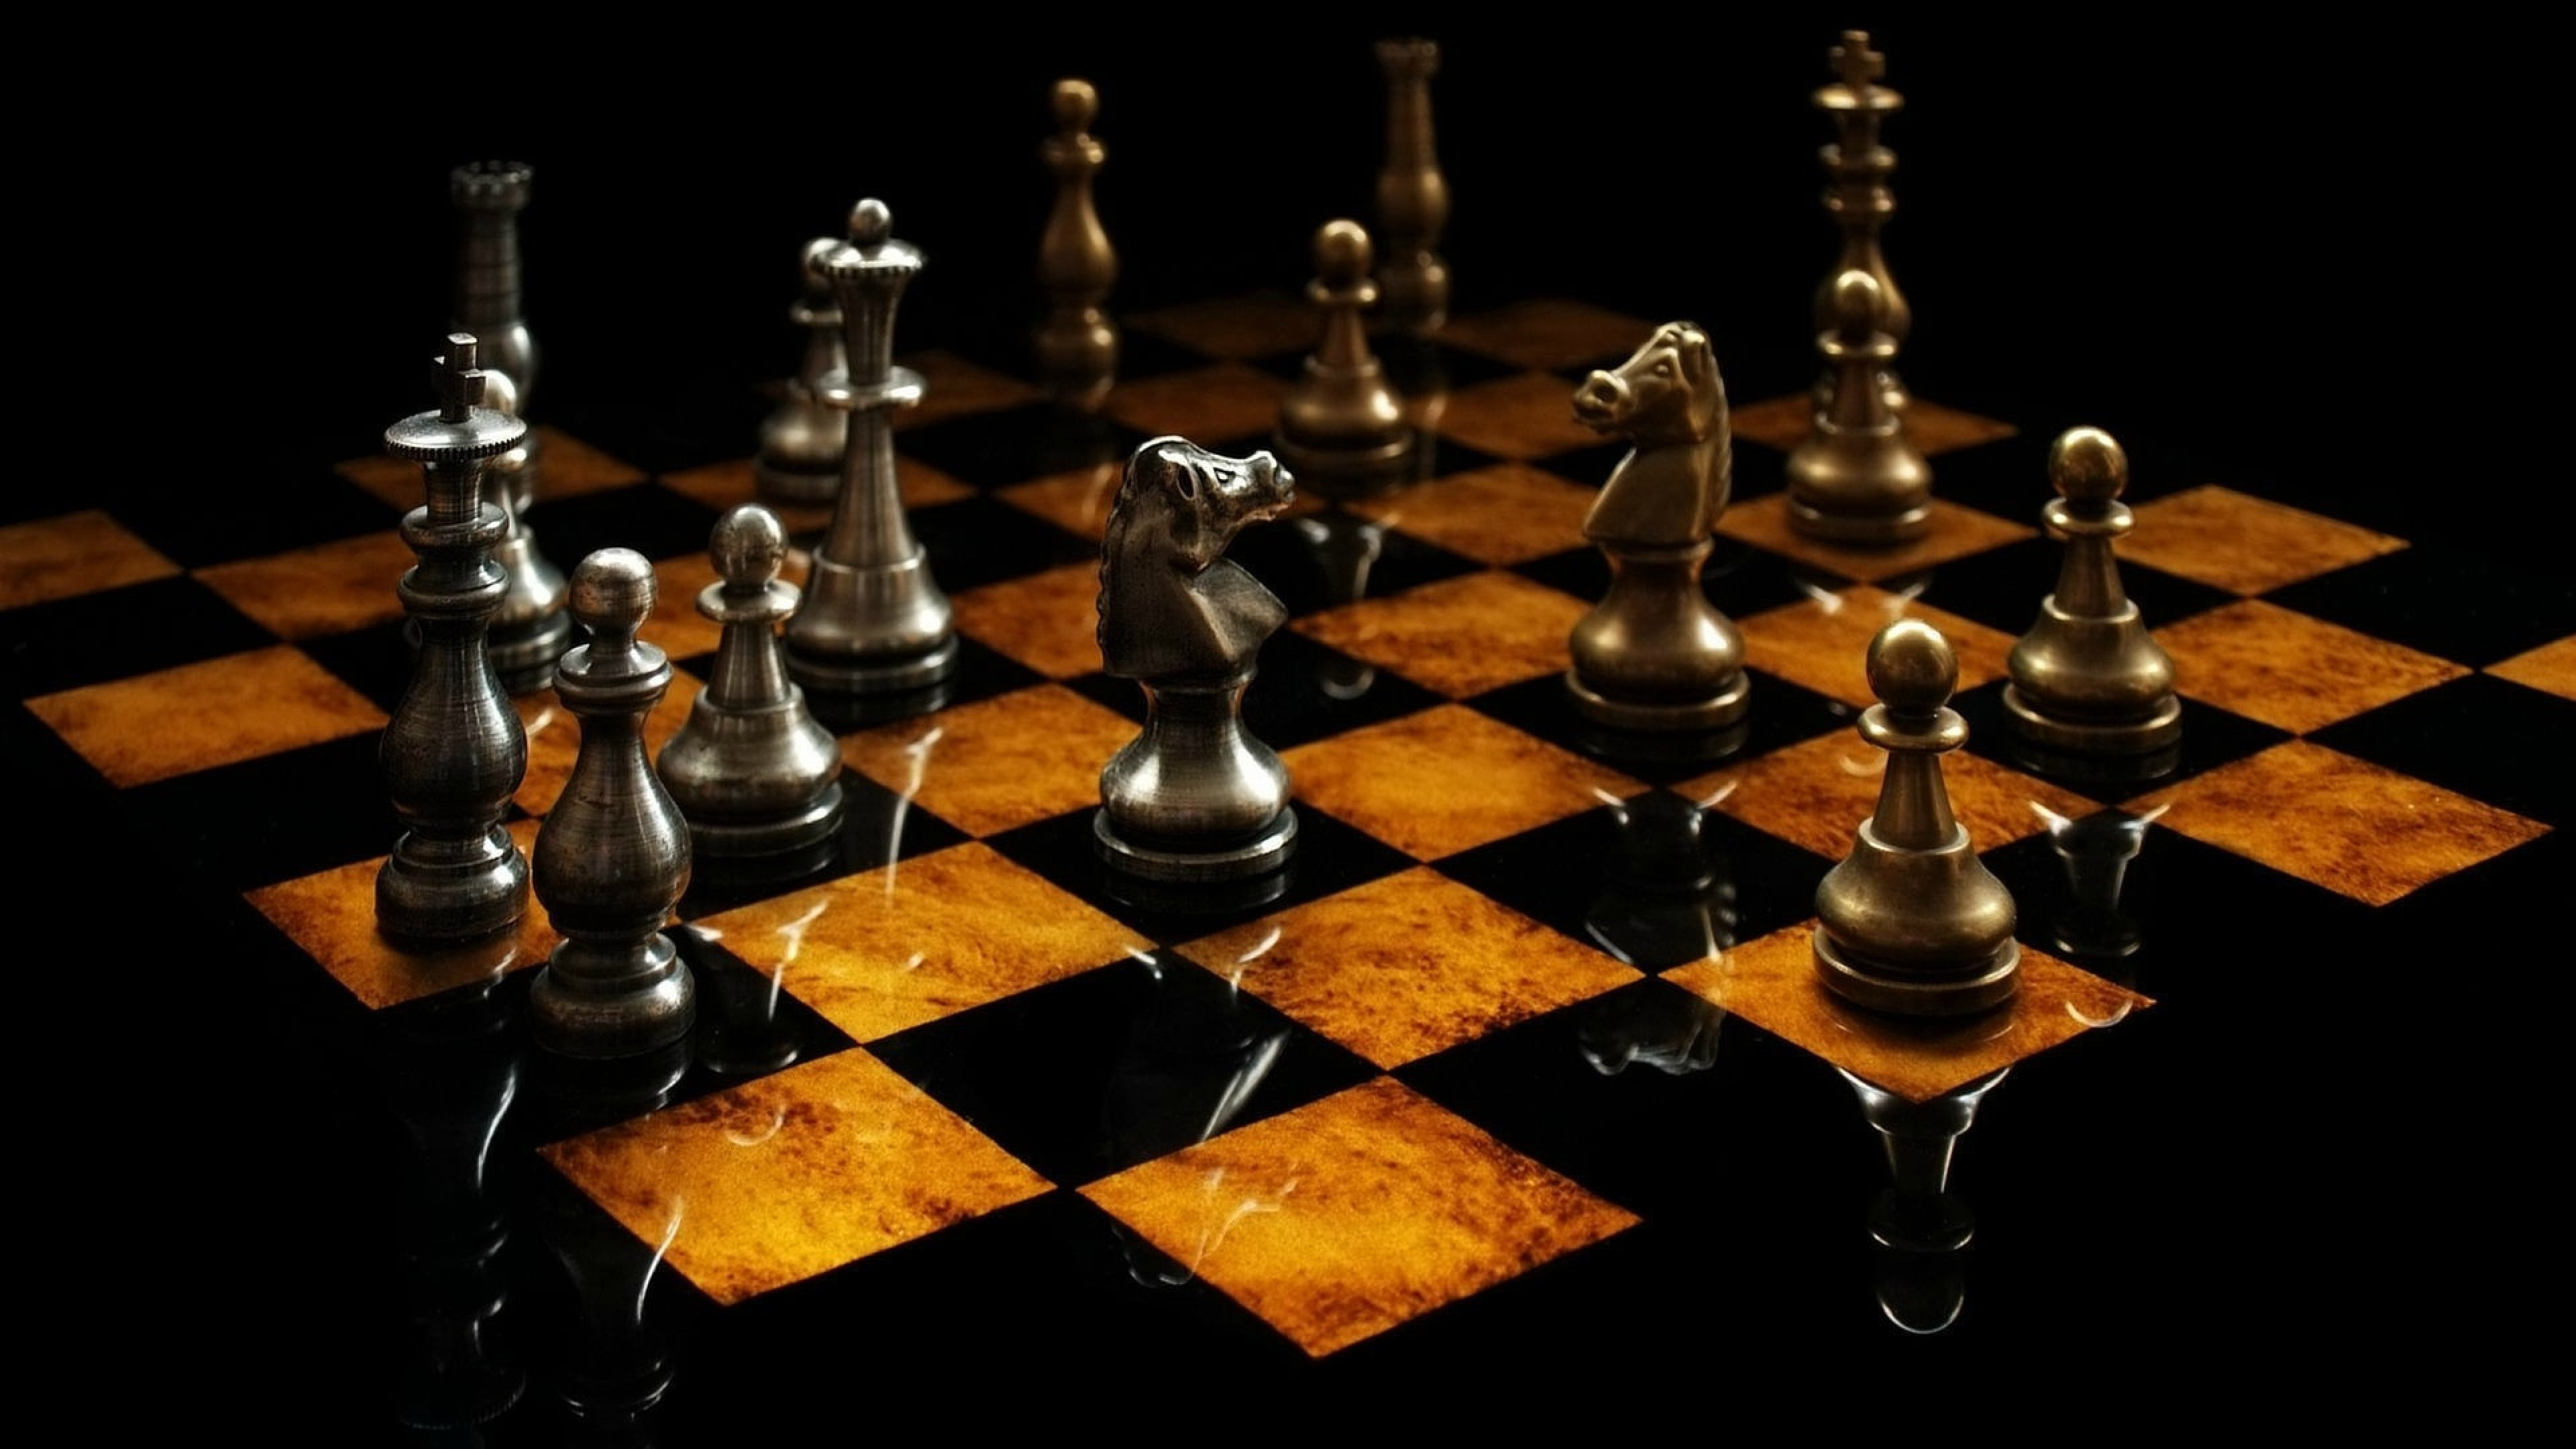 47+] 3D Chess Wallpaper - WallpaperSafari